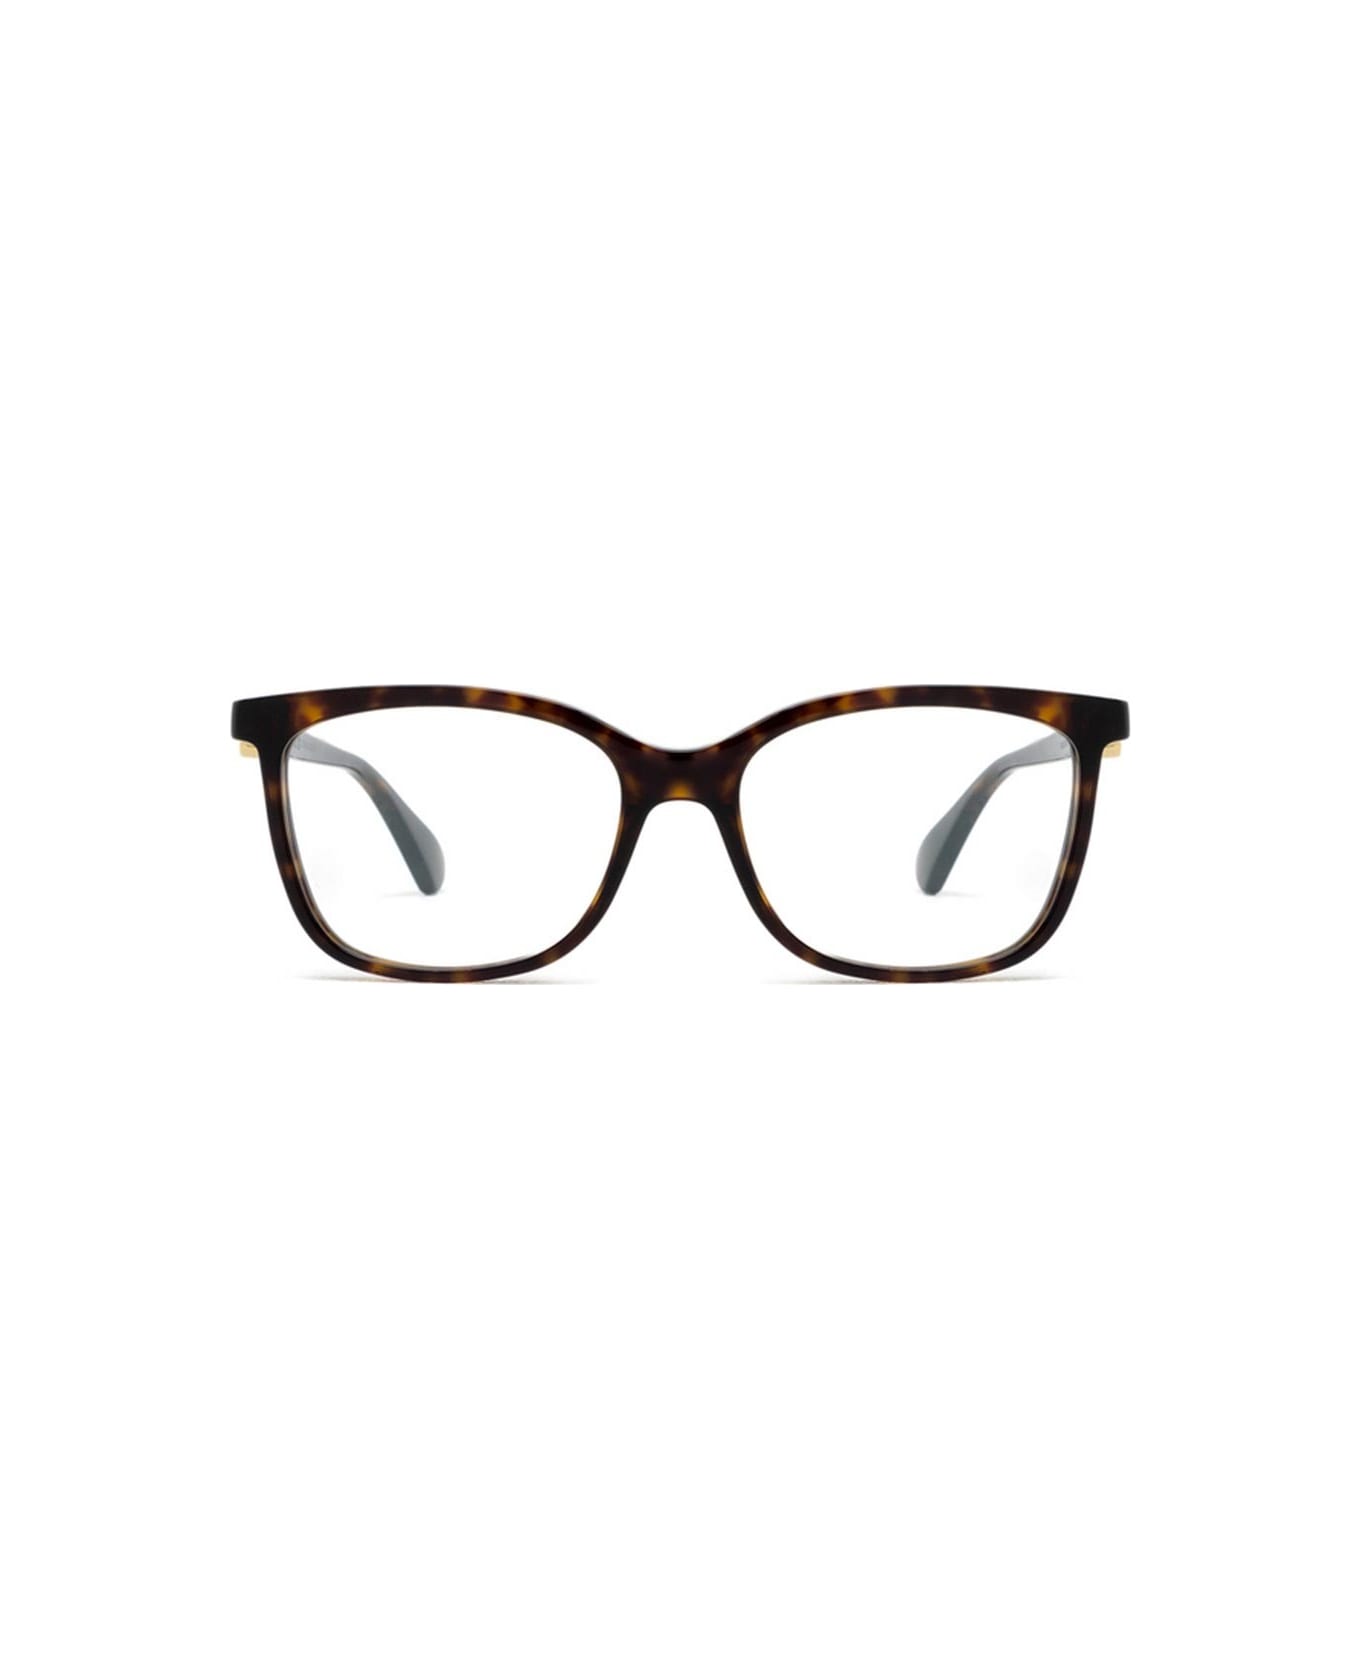 Cartier Eyewear Glasses - Havana